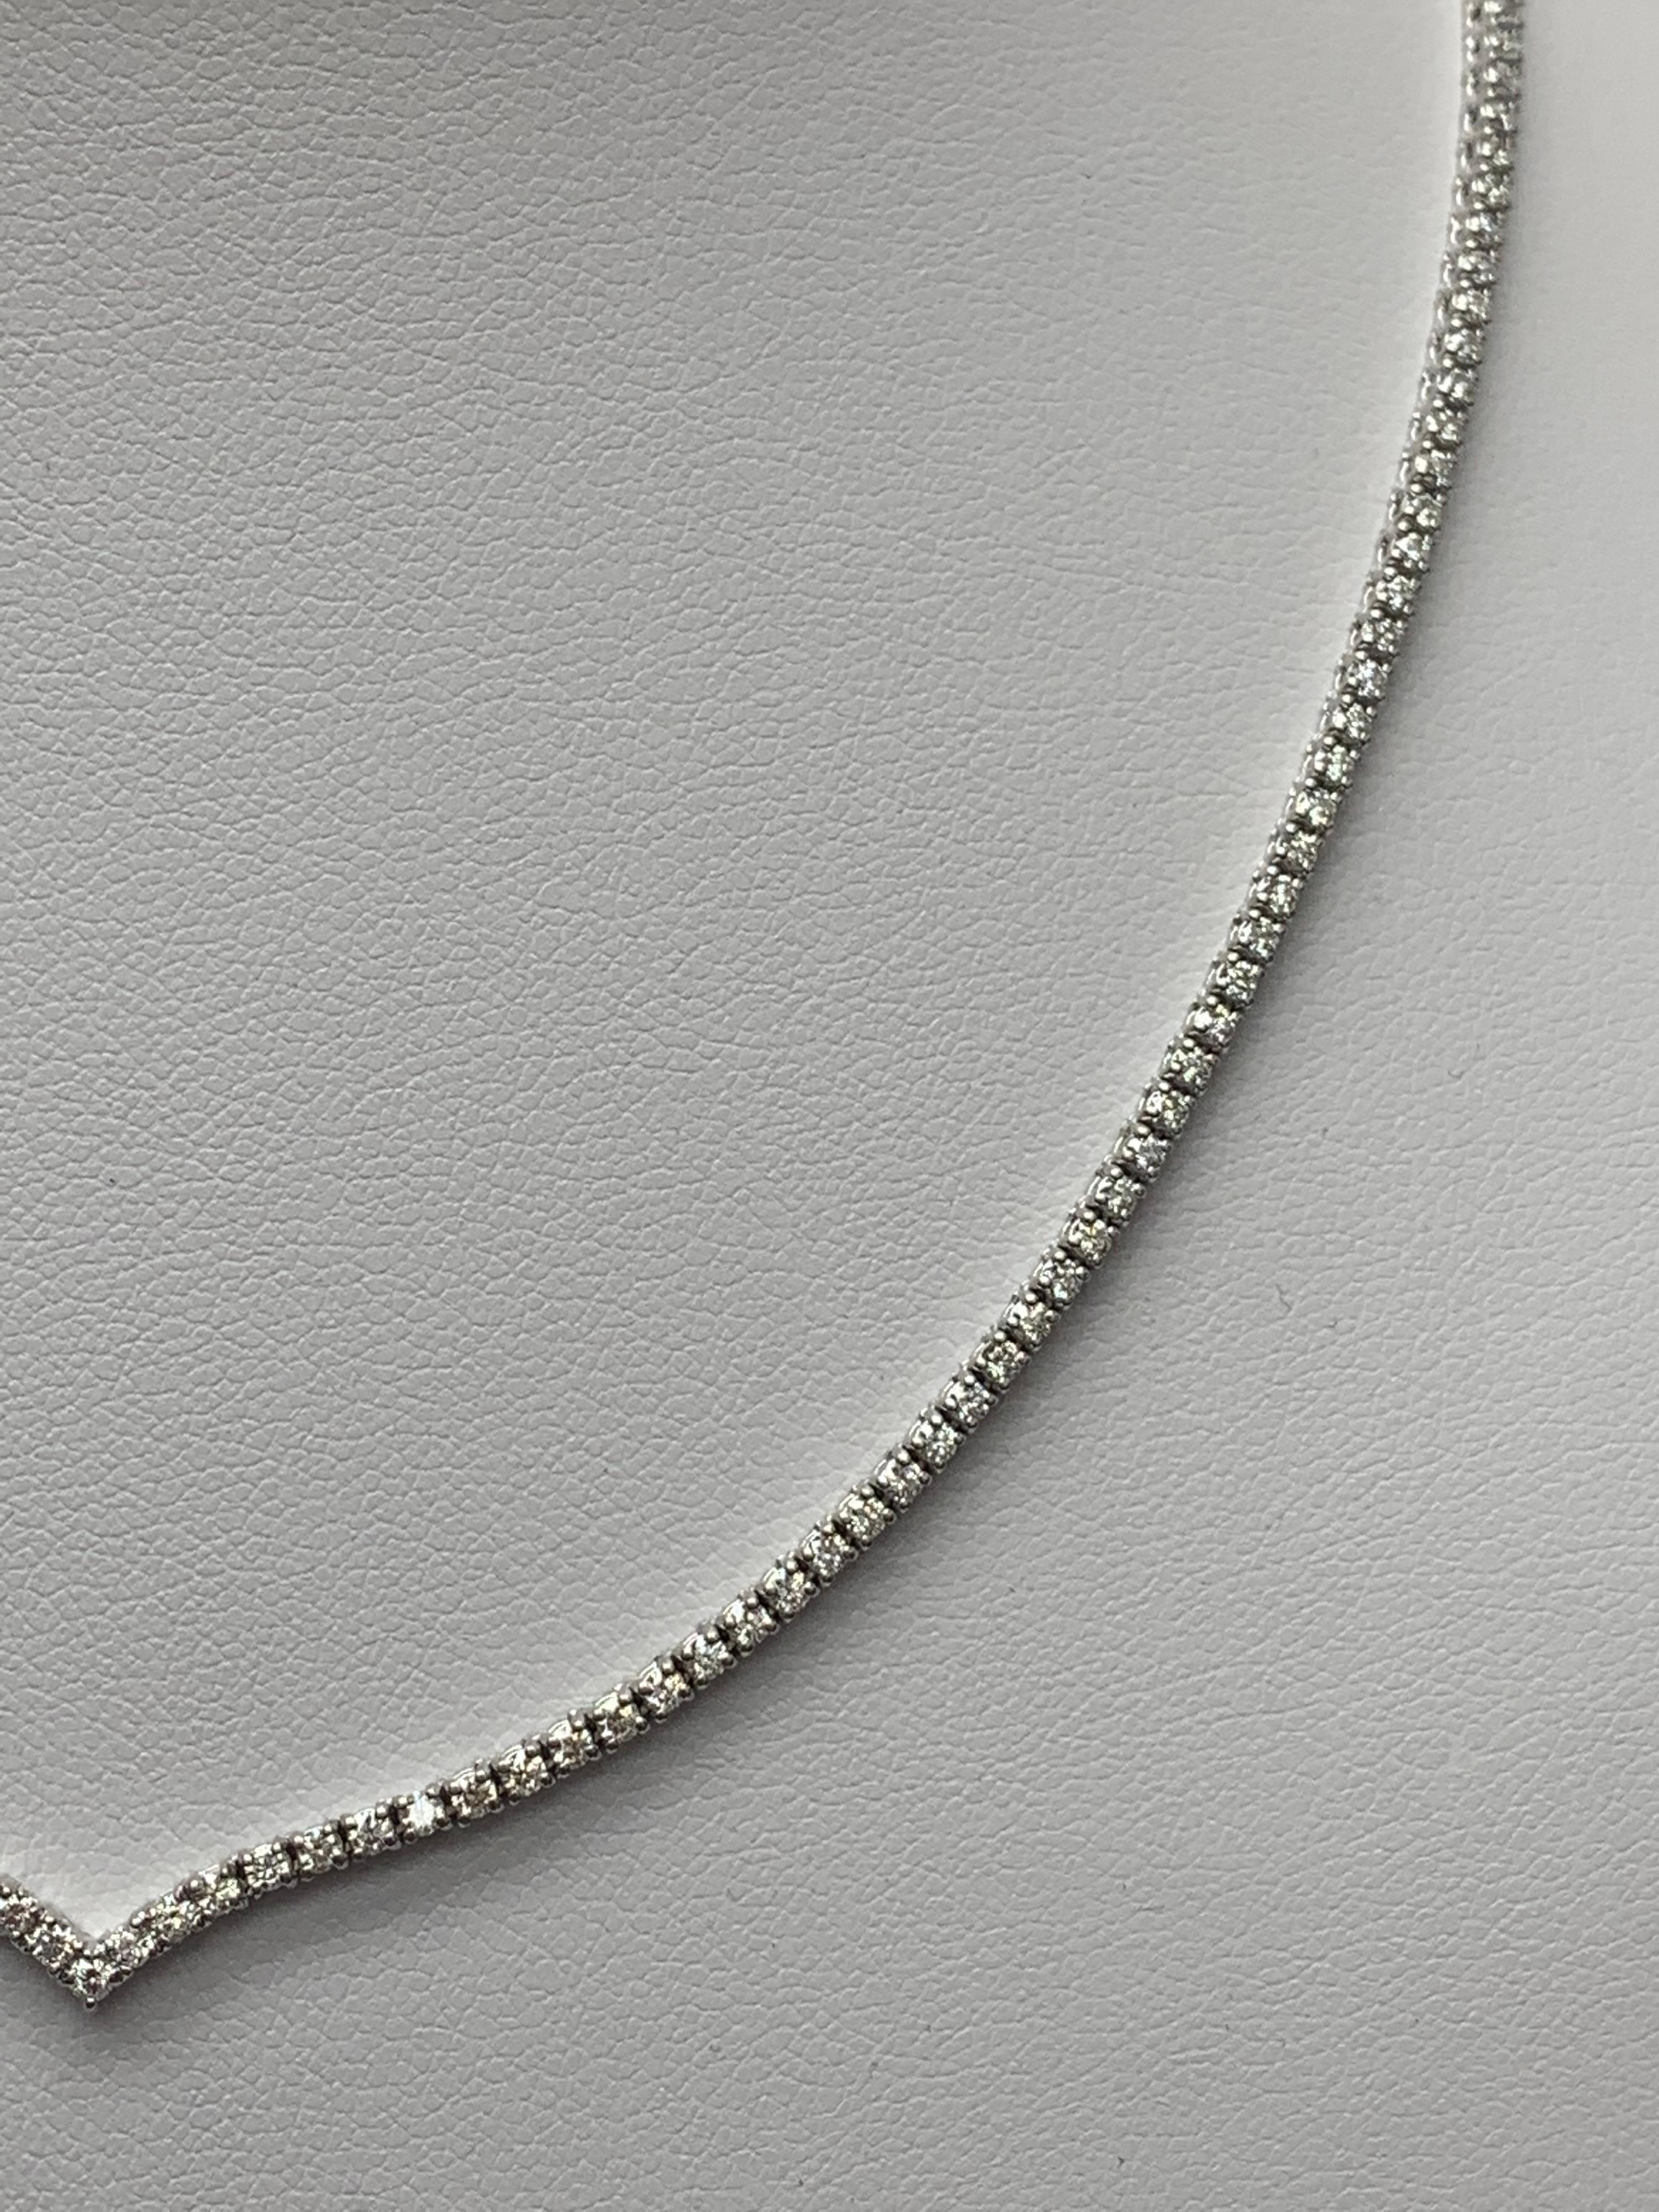 Brilliant Cut 3.58 Carat Diamond Tennis Necklace in 14K White Gold For Sale